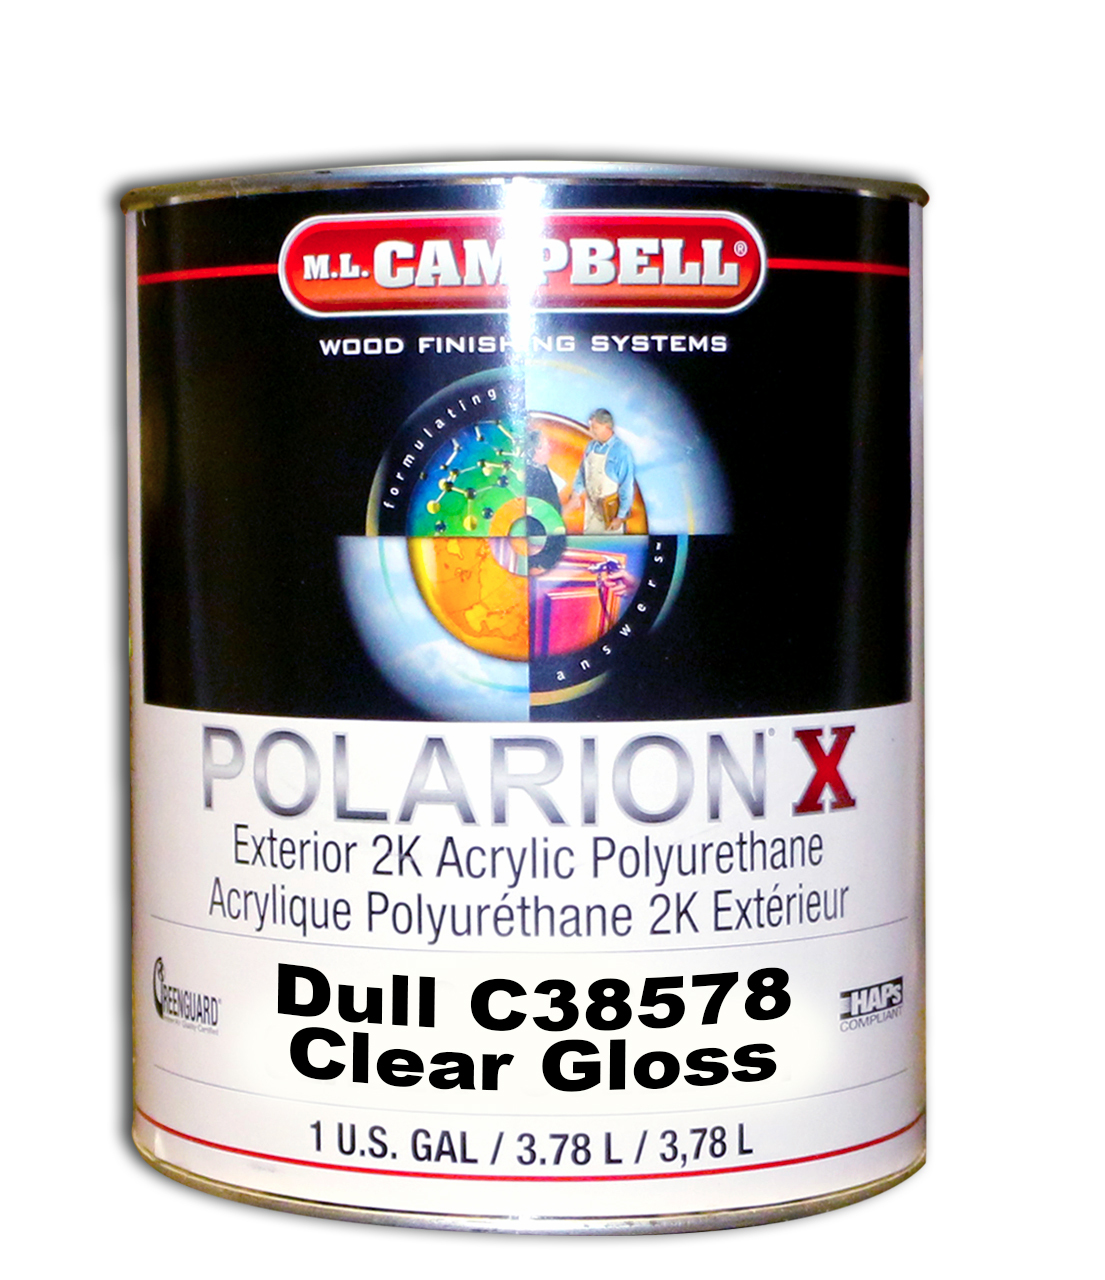 Polarion X Exterior Clear Gloss, DSI